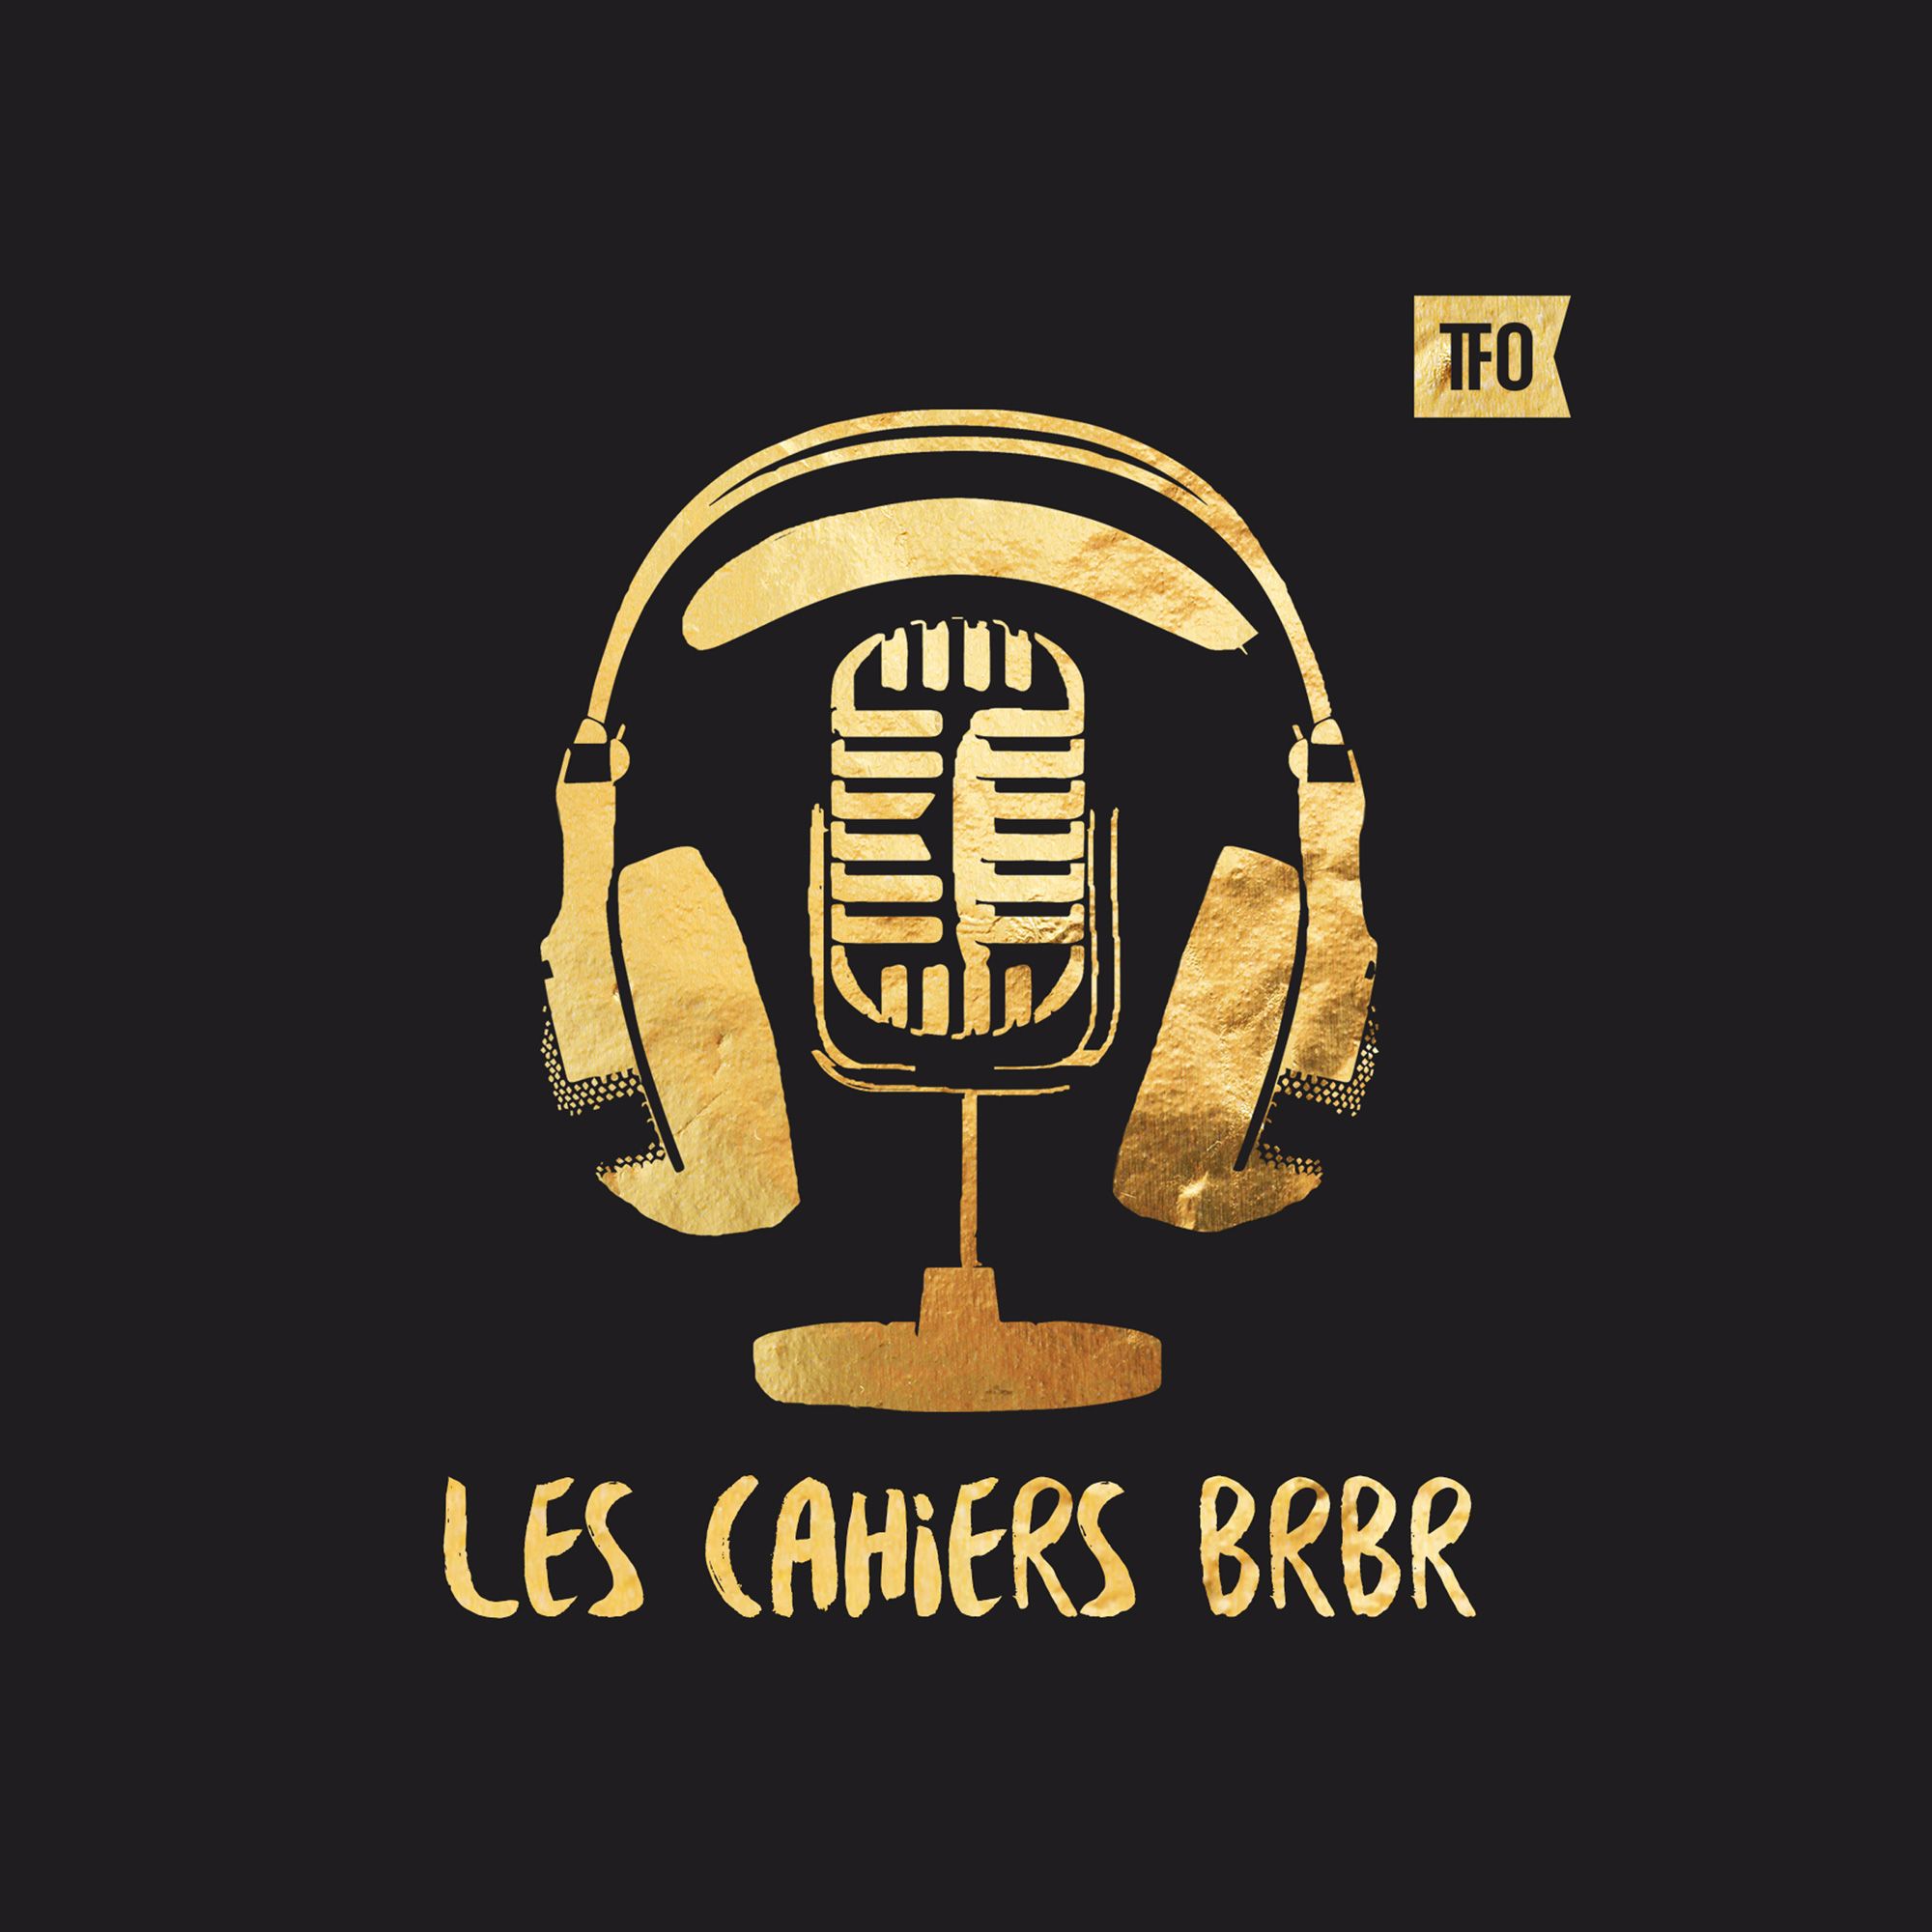 Les Cahiers BRBR